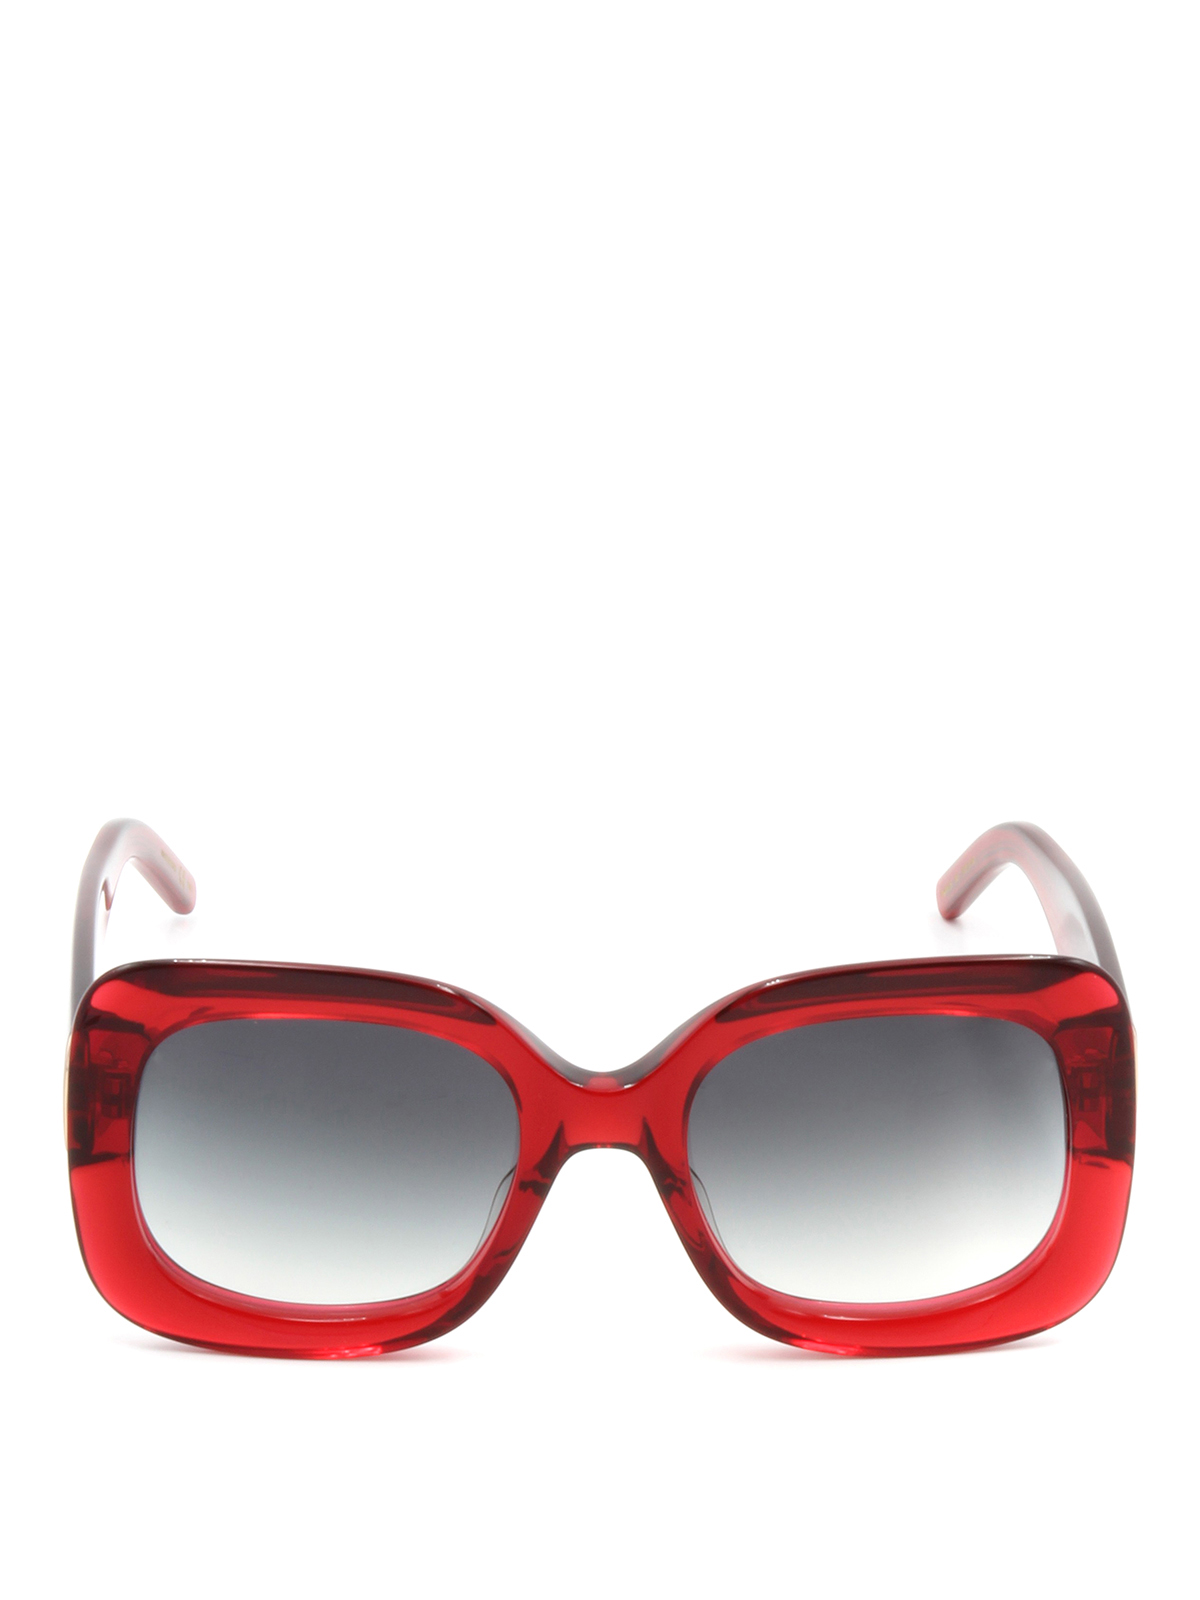 Sunglasses Pomellato - Oversize red frame squared glasses - PM0042S1